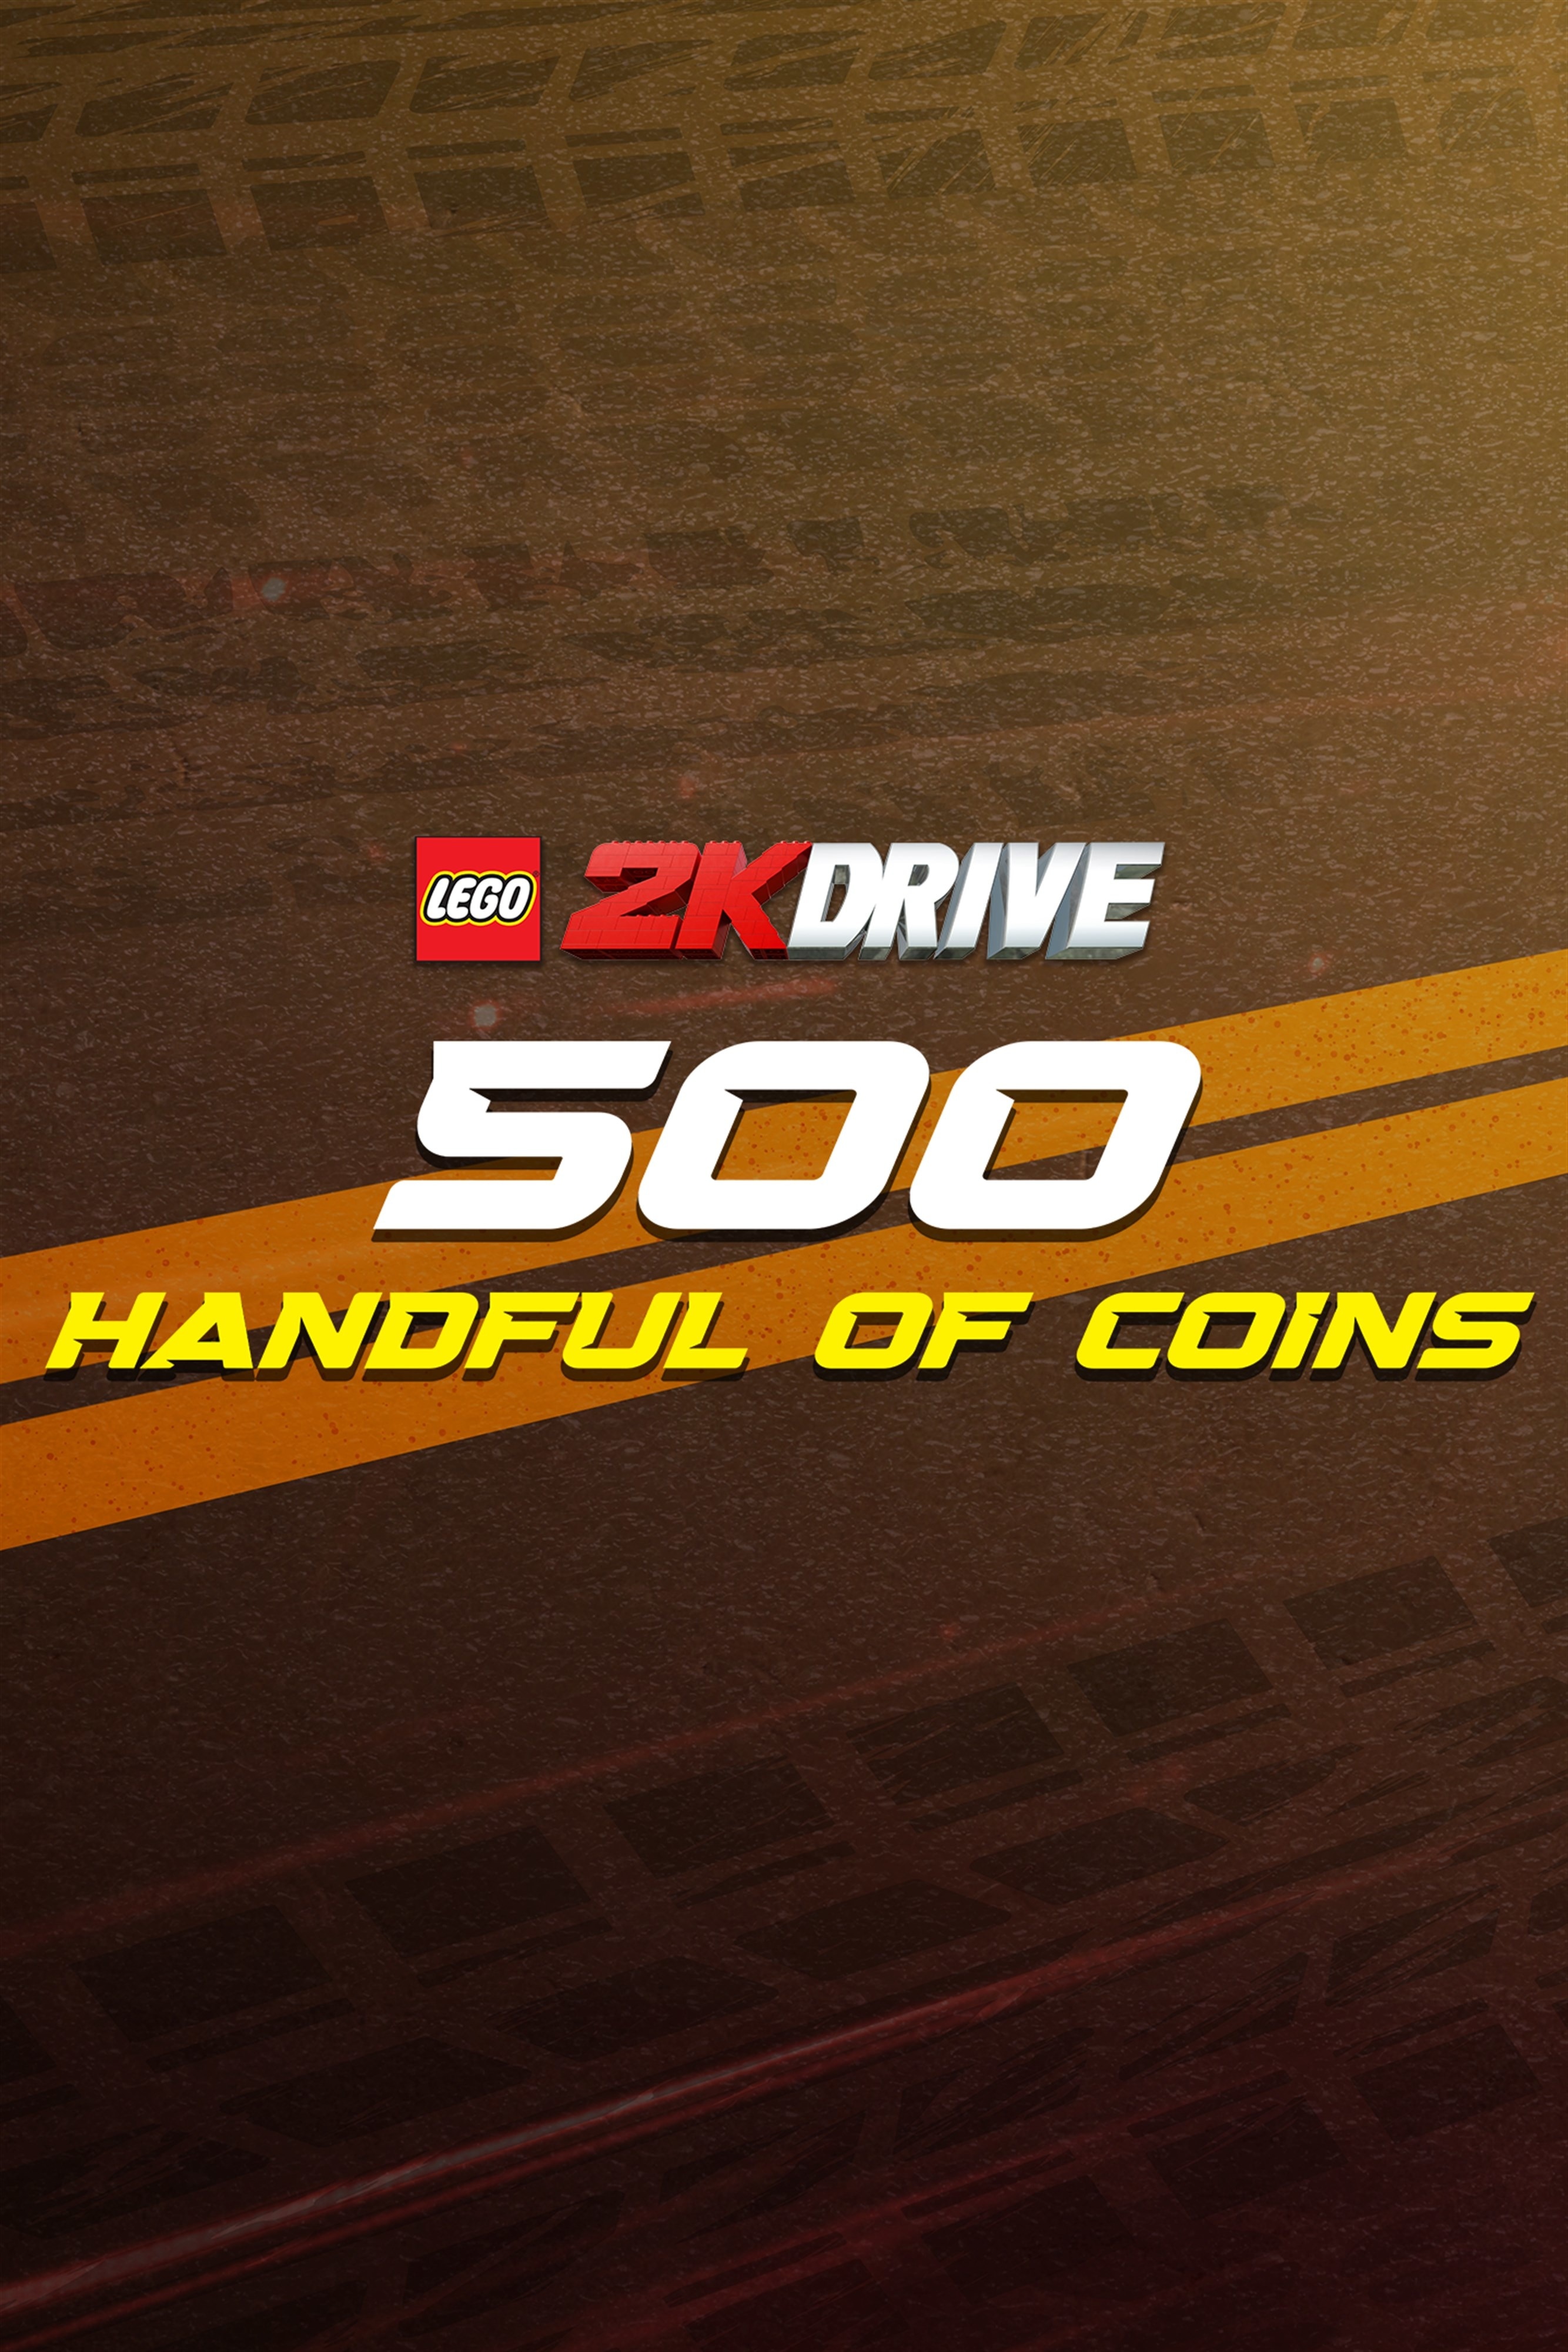 Xbox LEGO 2K Drive Handful of Coins Download Code (Xbox) zum Sofortdownload